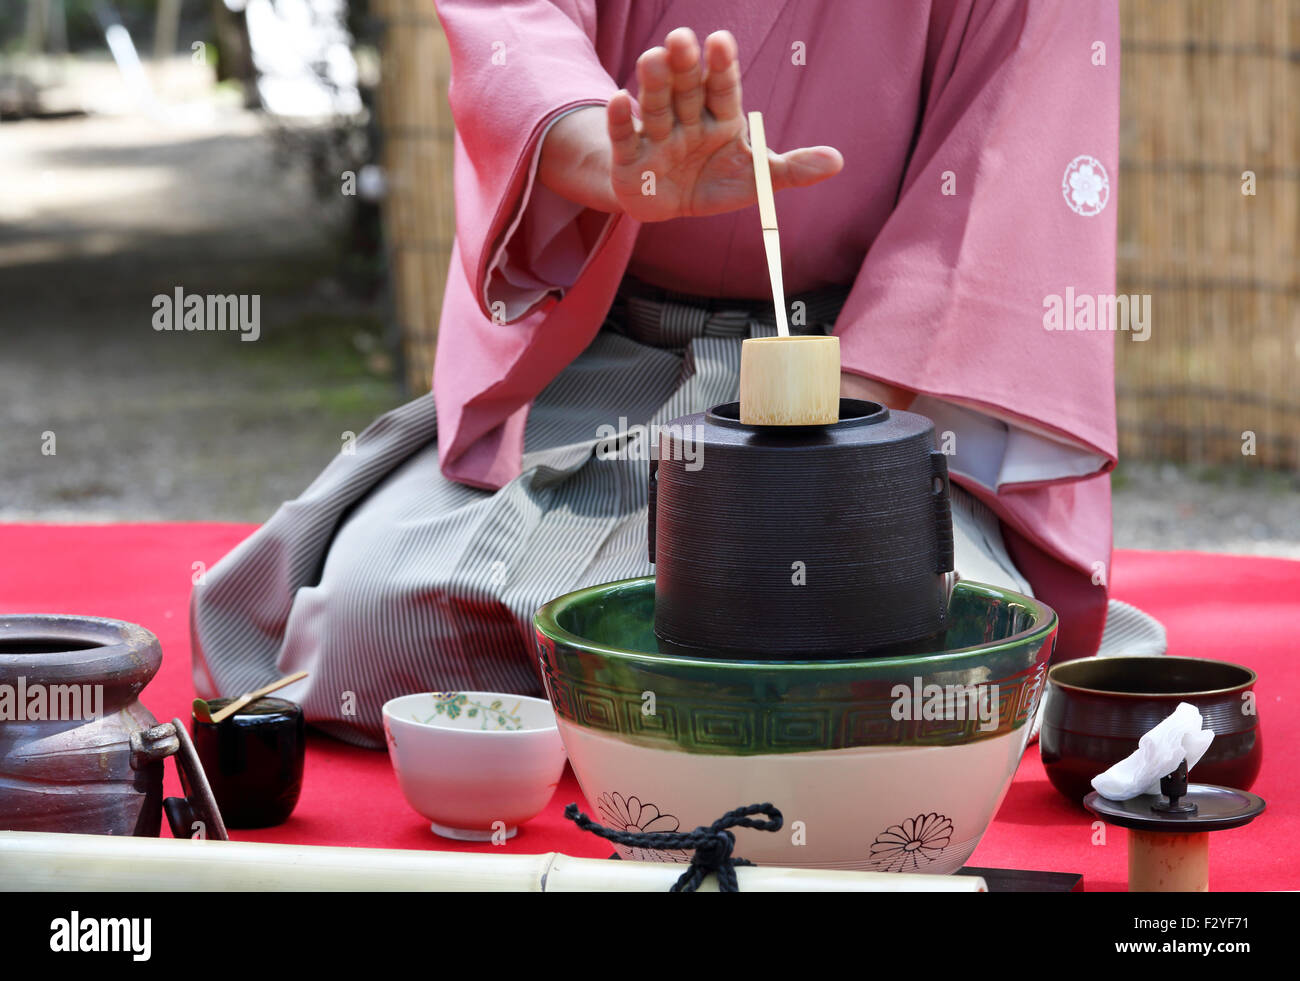 Matcha Ceremony Set of 2 -Made in Japan – Japanese Tea KIMIKURA